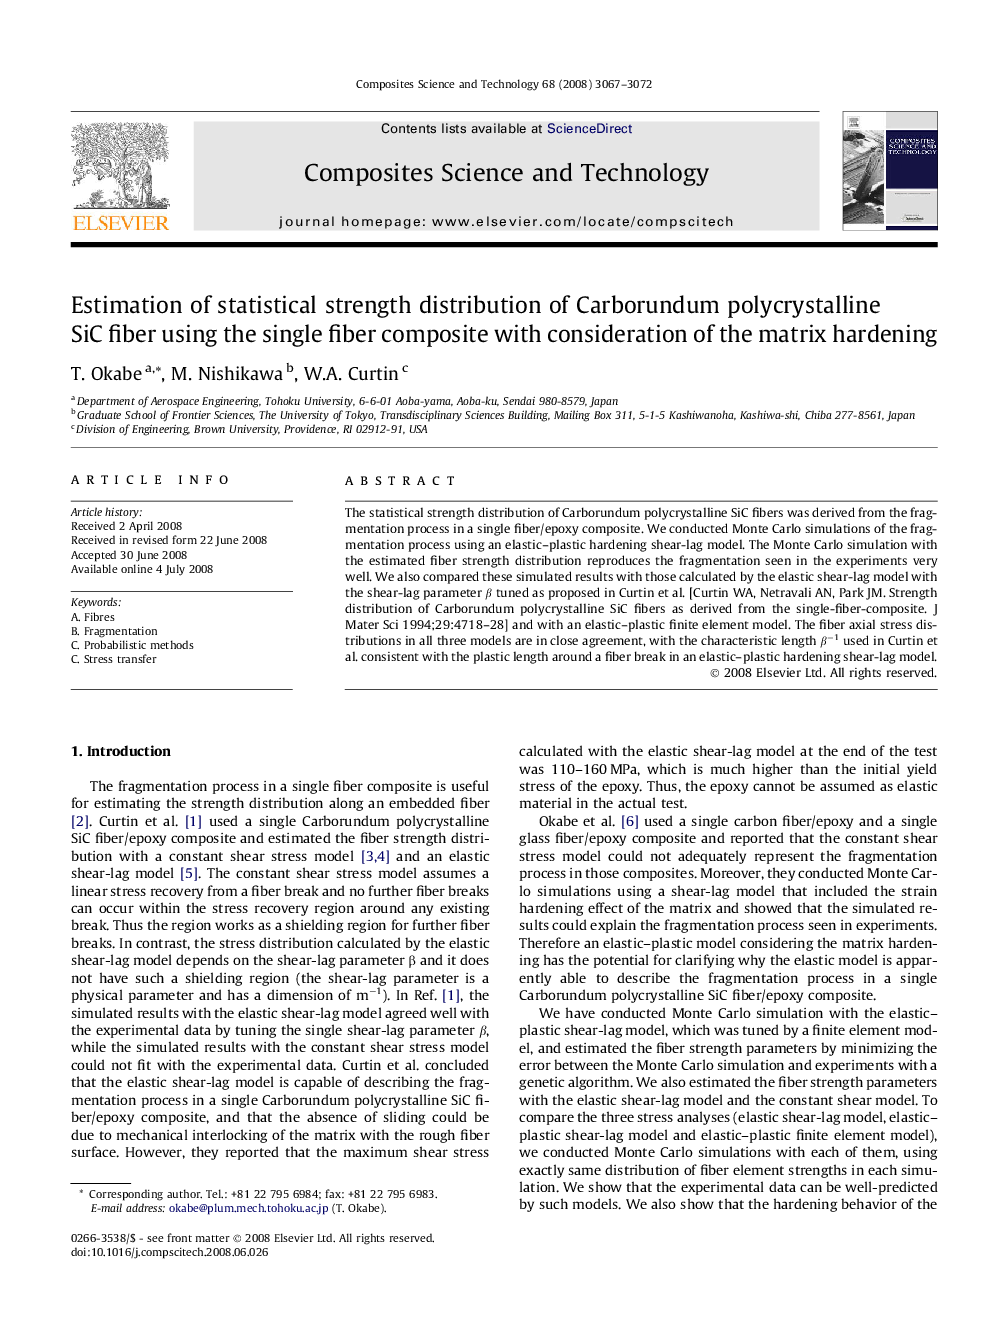 Estimation of statistical strength distribution of Carborundum polycrystalline SiC fiber using the single fiber composite with consideration of the matrix hardening